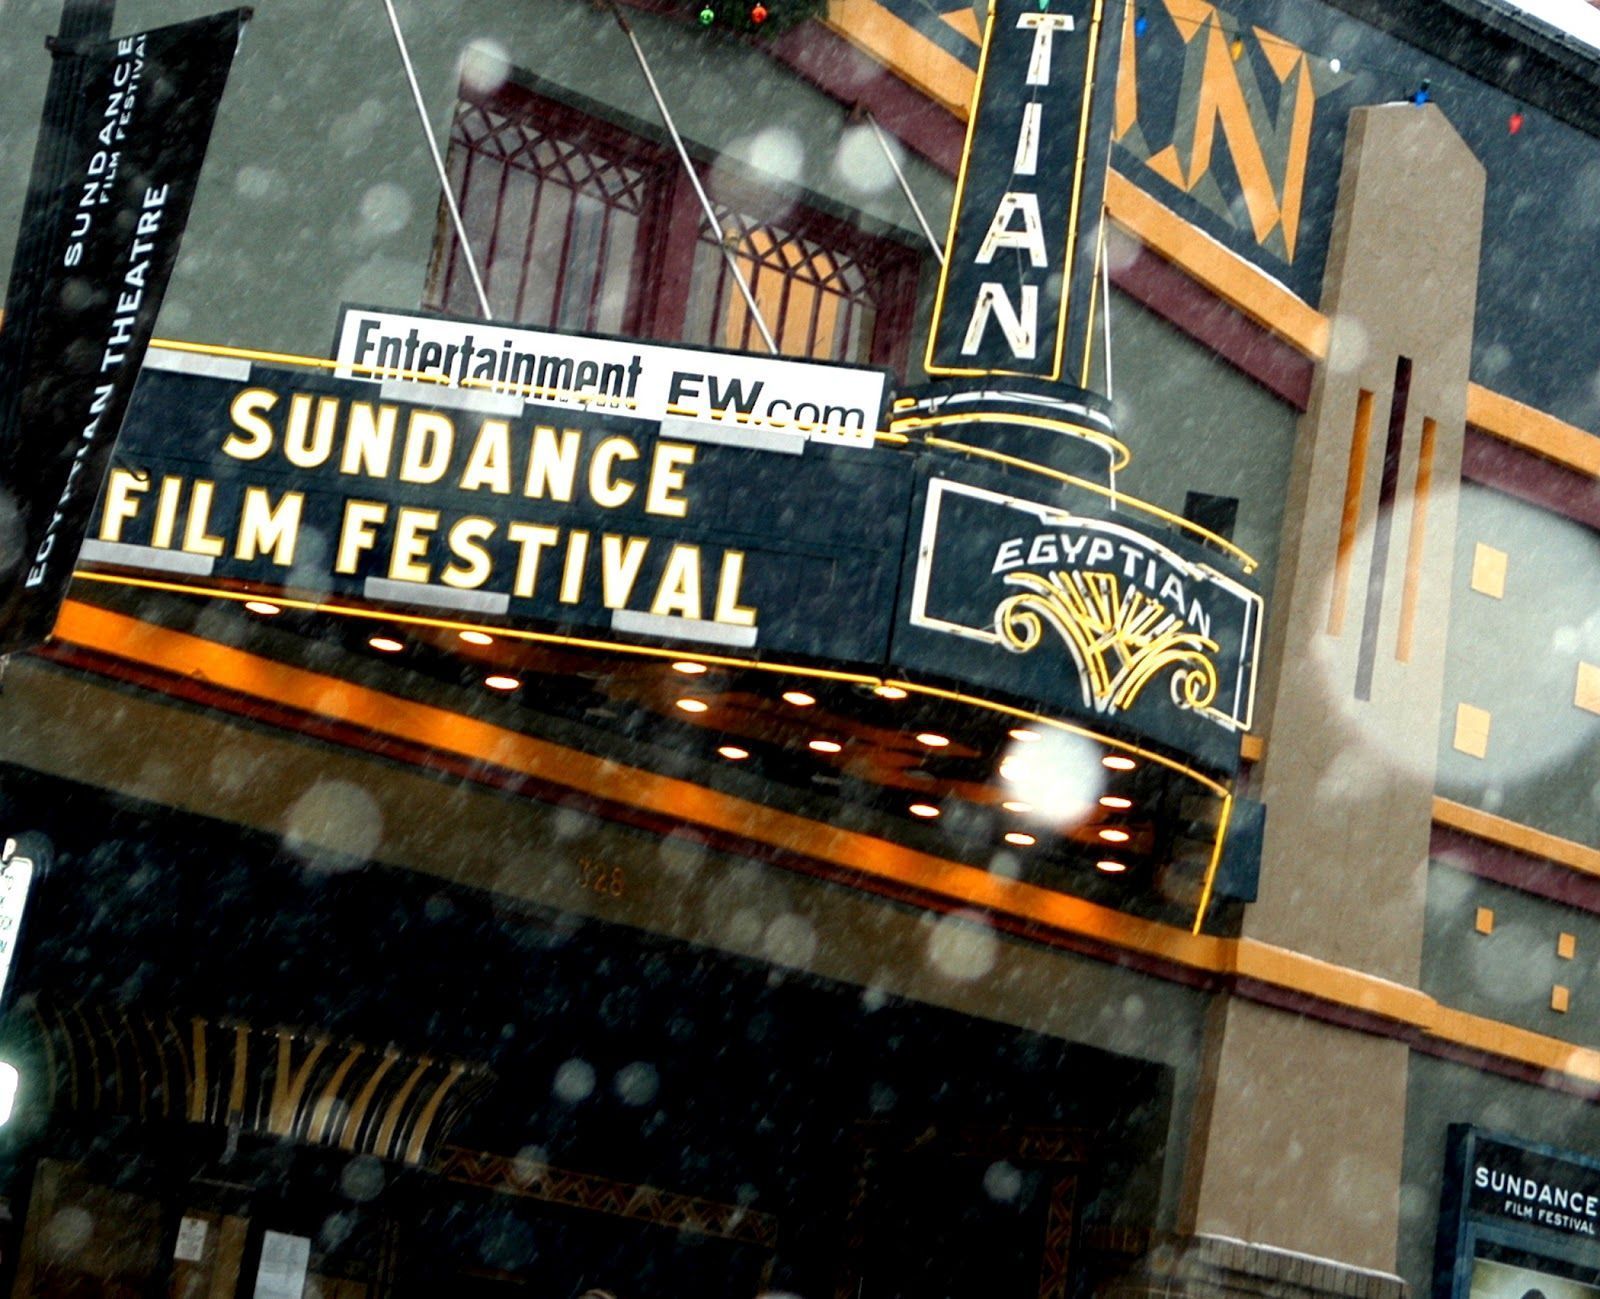 Awetya: gallery Sundance Film Festival